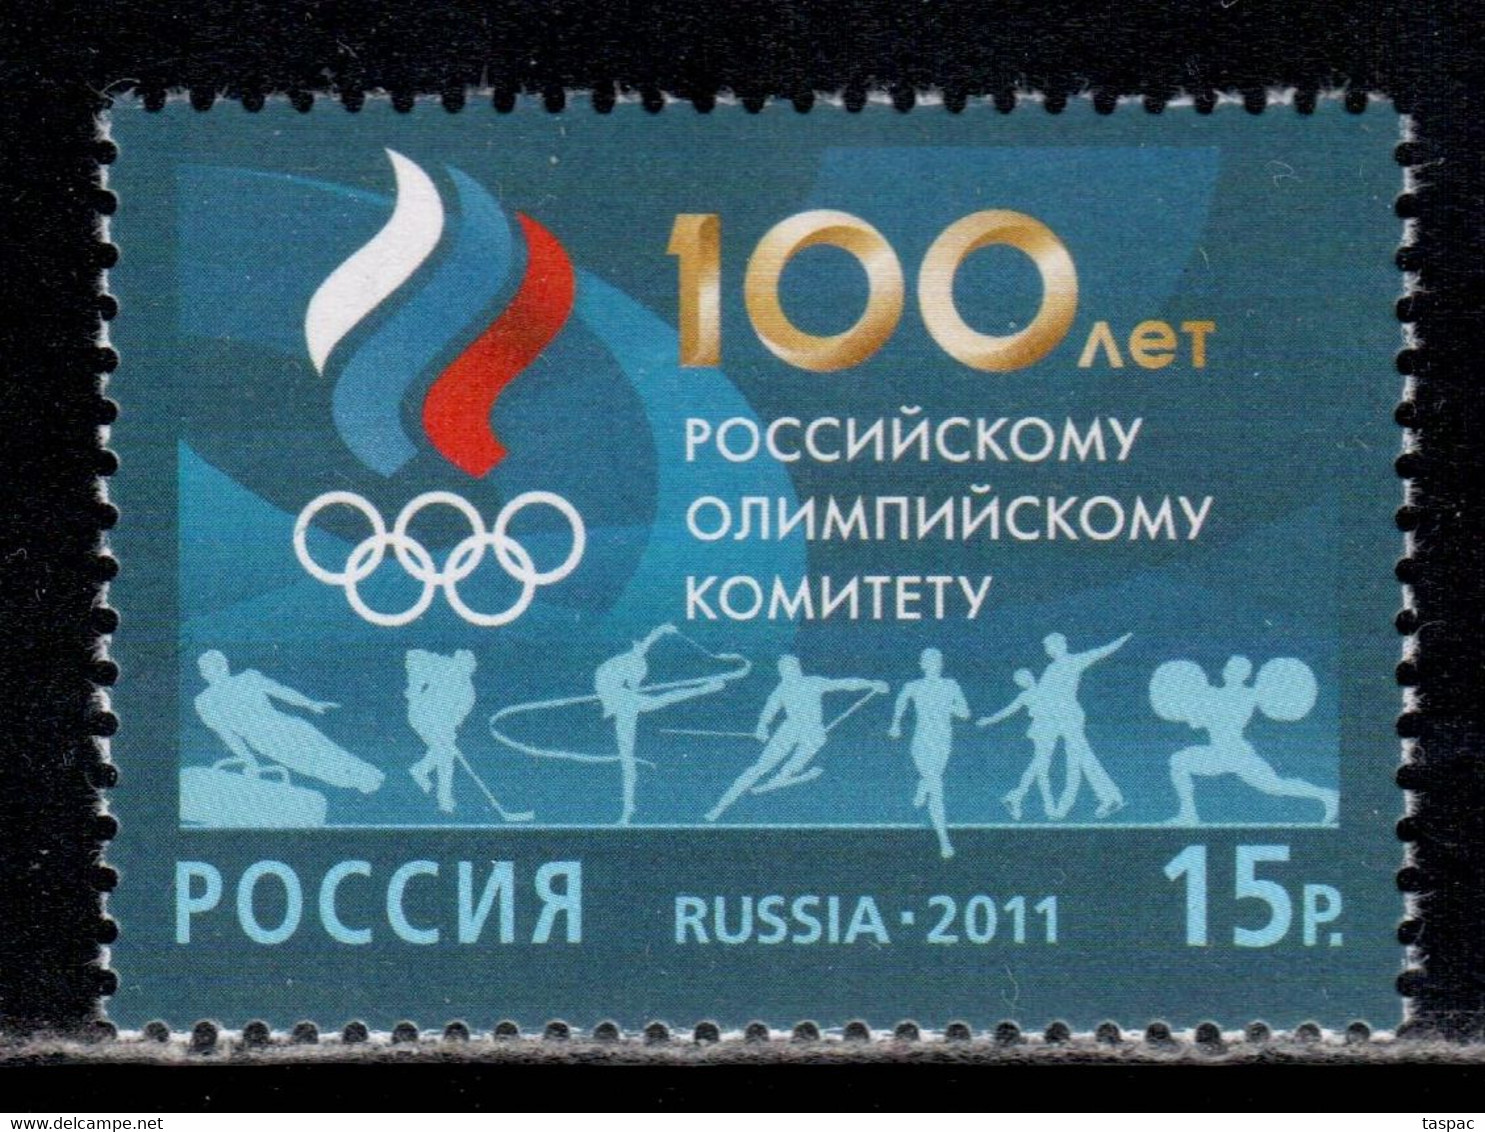 Russia 2011 Mi# 1777 ** MNH - Centenary Of The Russian Olympic Committee - Winter 2014: Sochi